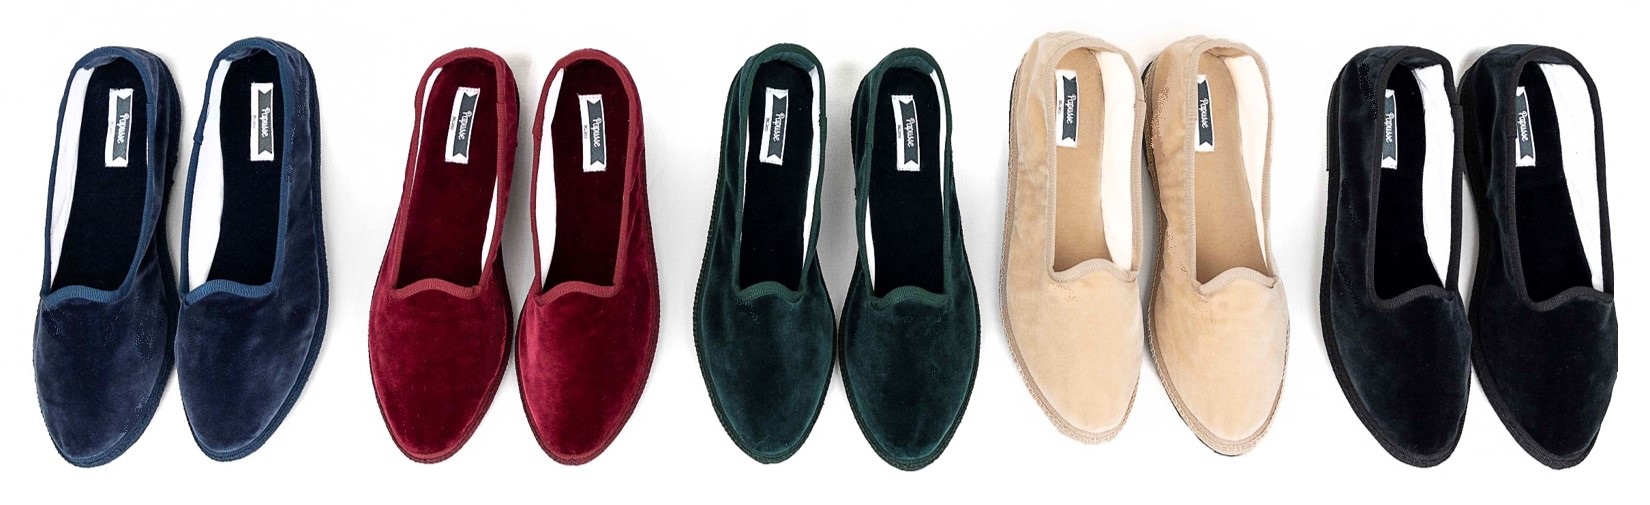 slippers range_mute colors